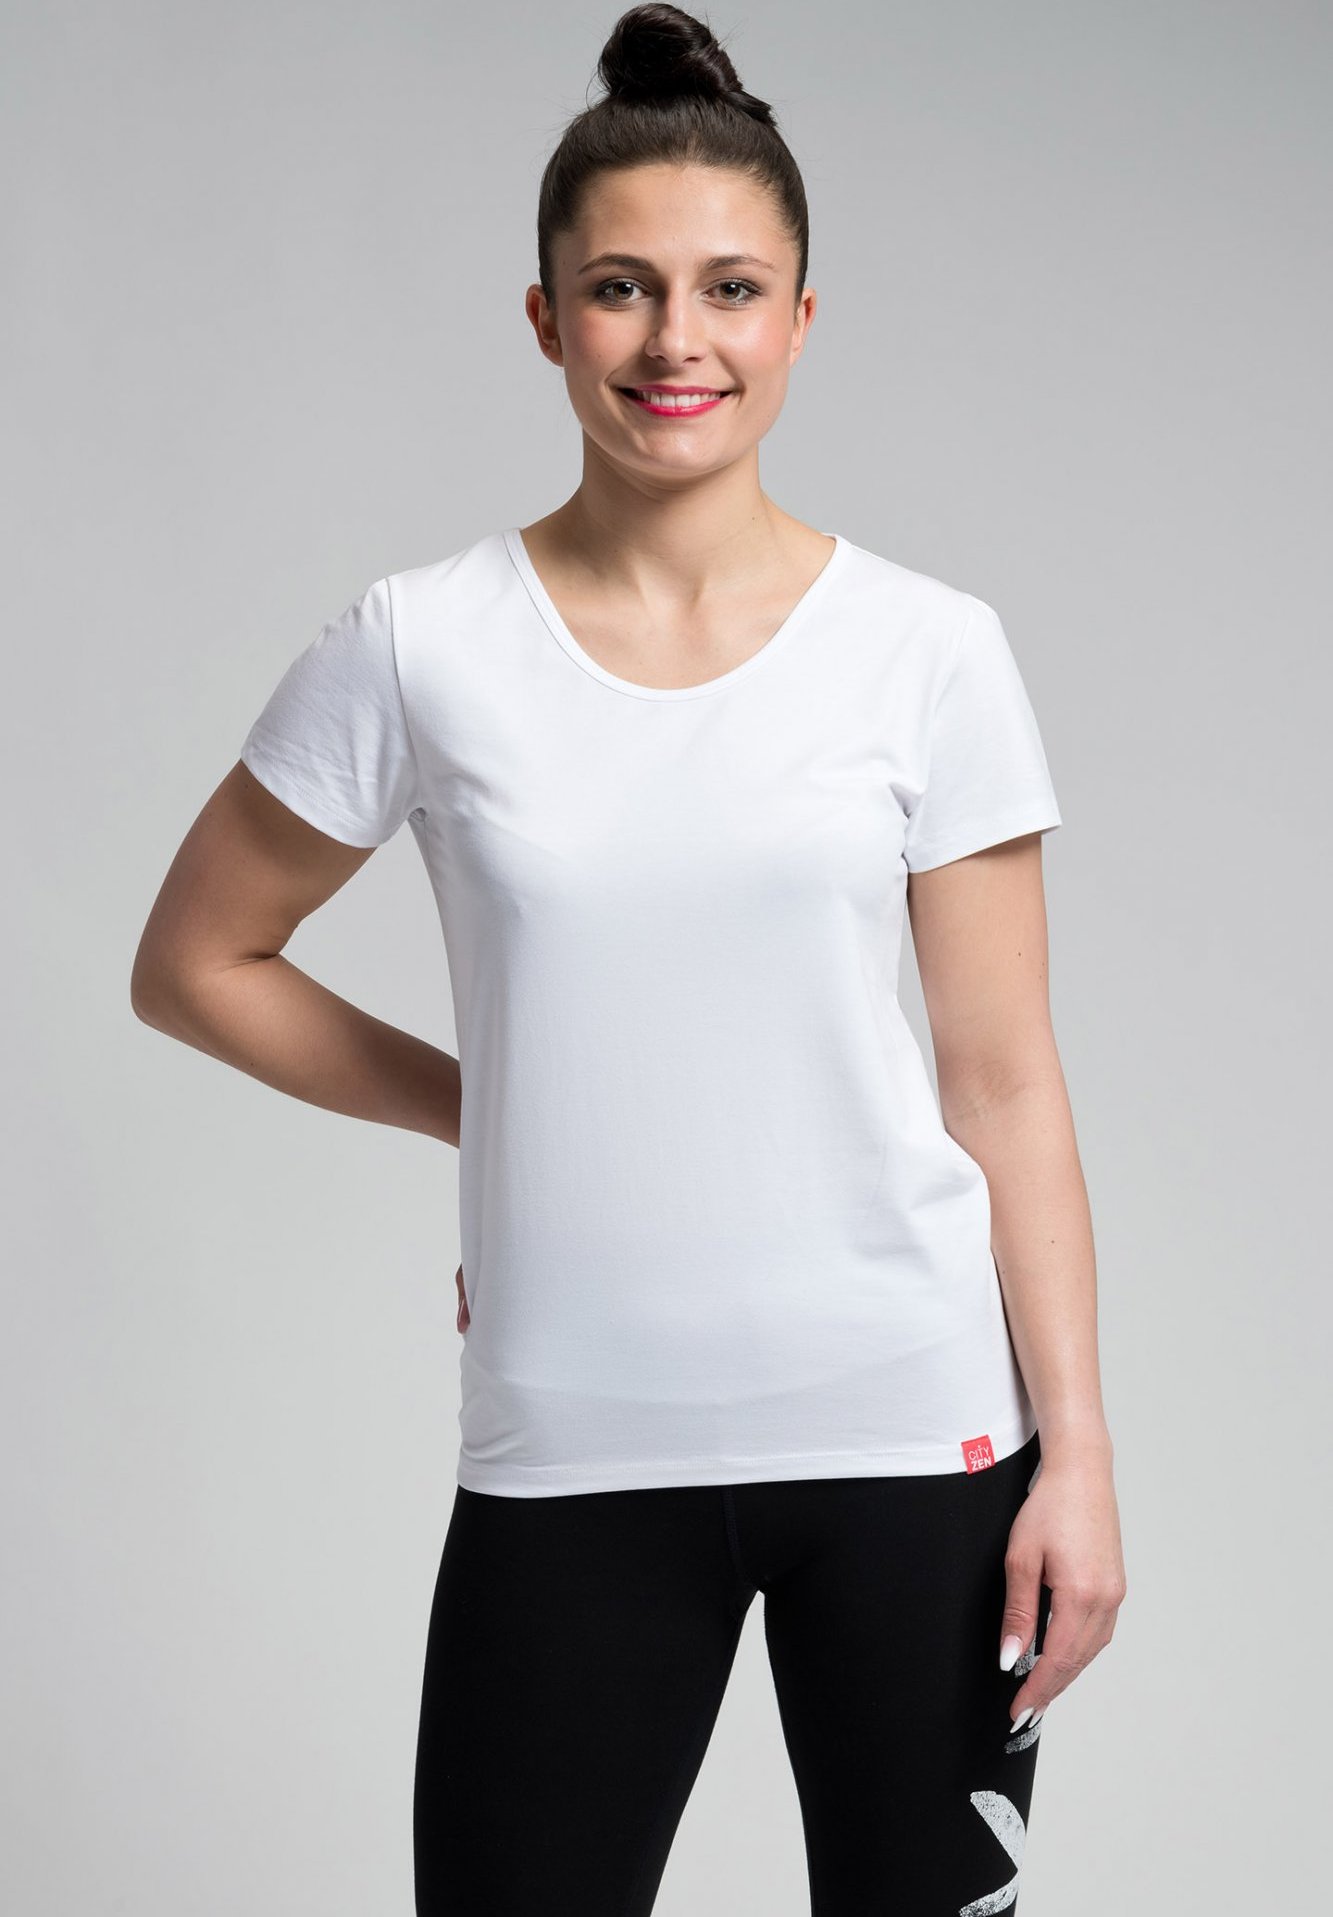 Dámské bavlněné triko CITYZEN bílé, klasické, s elastanem Velikost: XXL/44